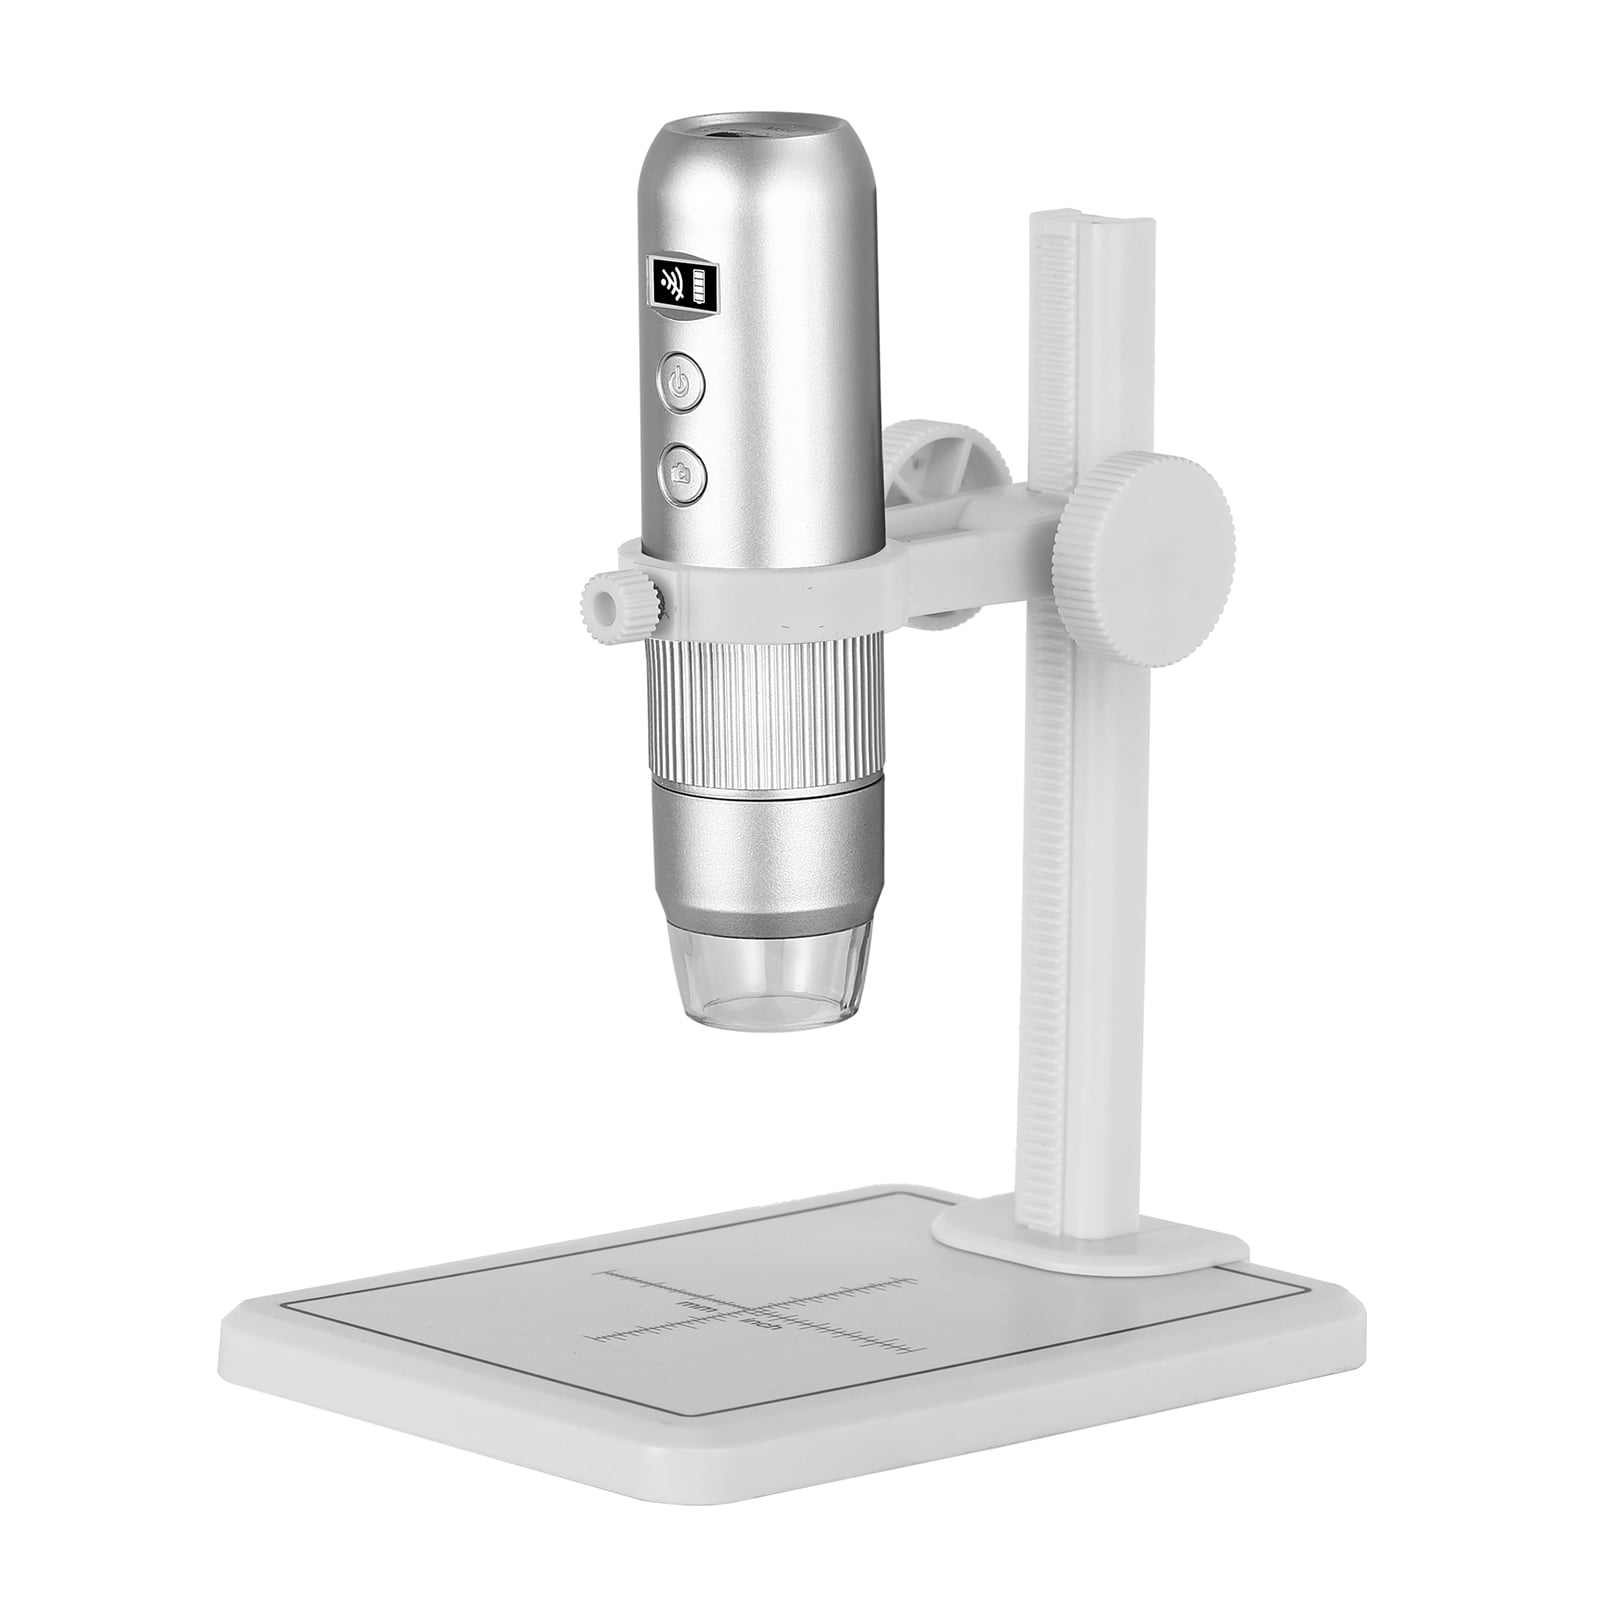 8 Adjustable LED Light Video Camera Microscope 4.3 Inch Built-in Screen 1080P 2 Megapixels 1000X Magnification Zoom N \ A Kids Beginner Digital Microscope 